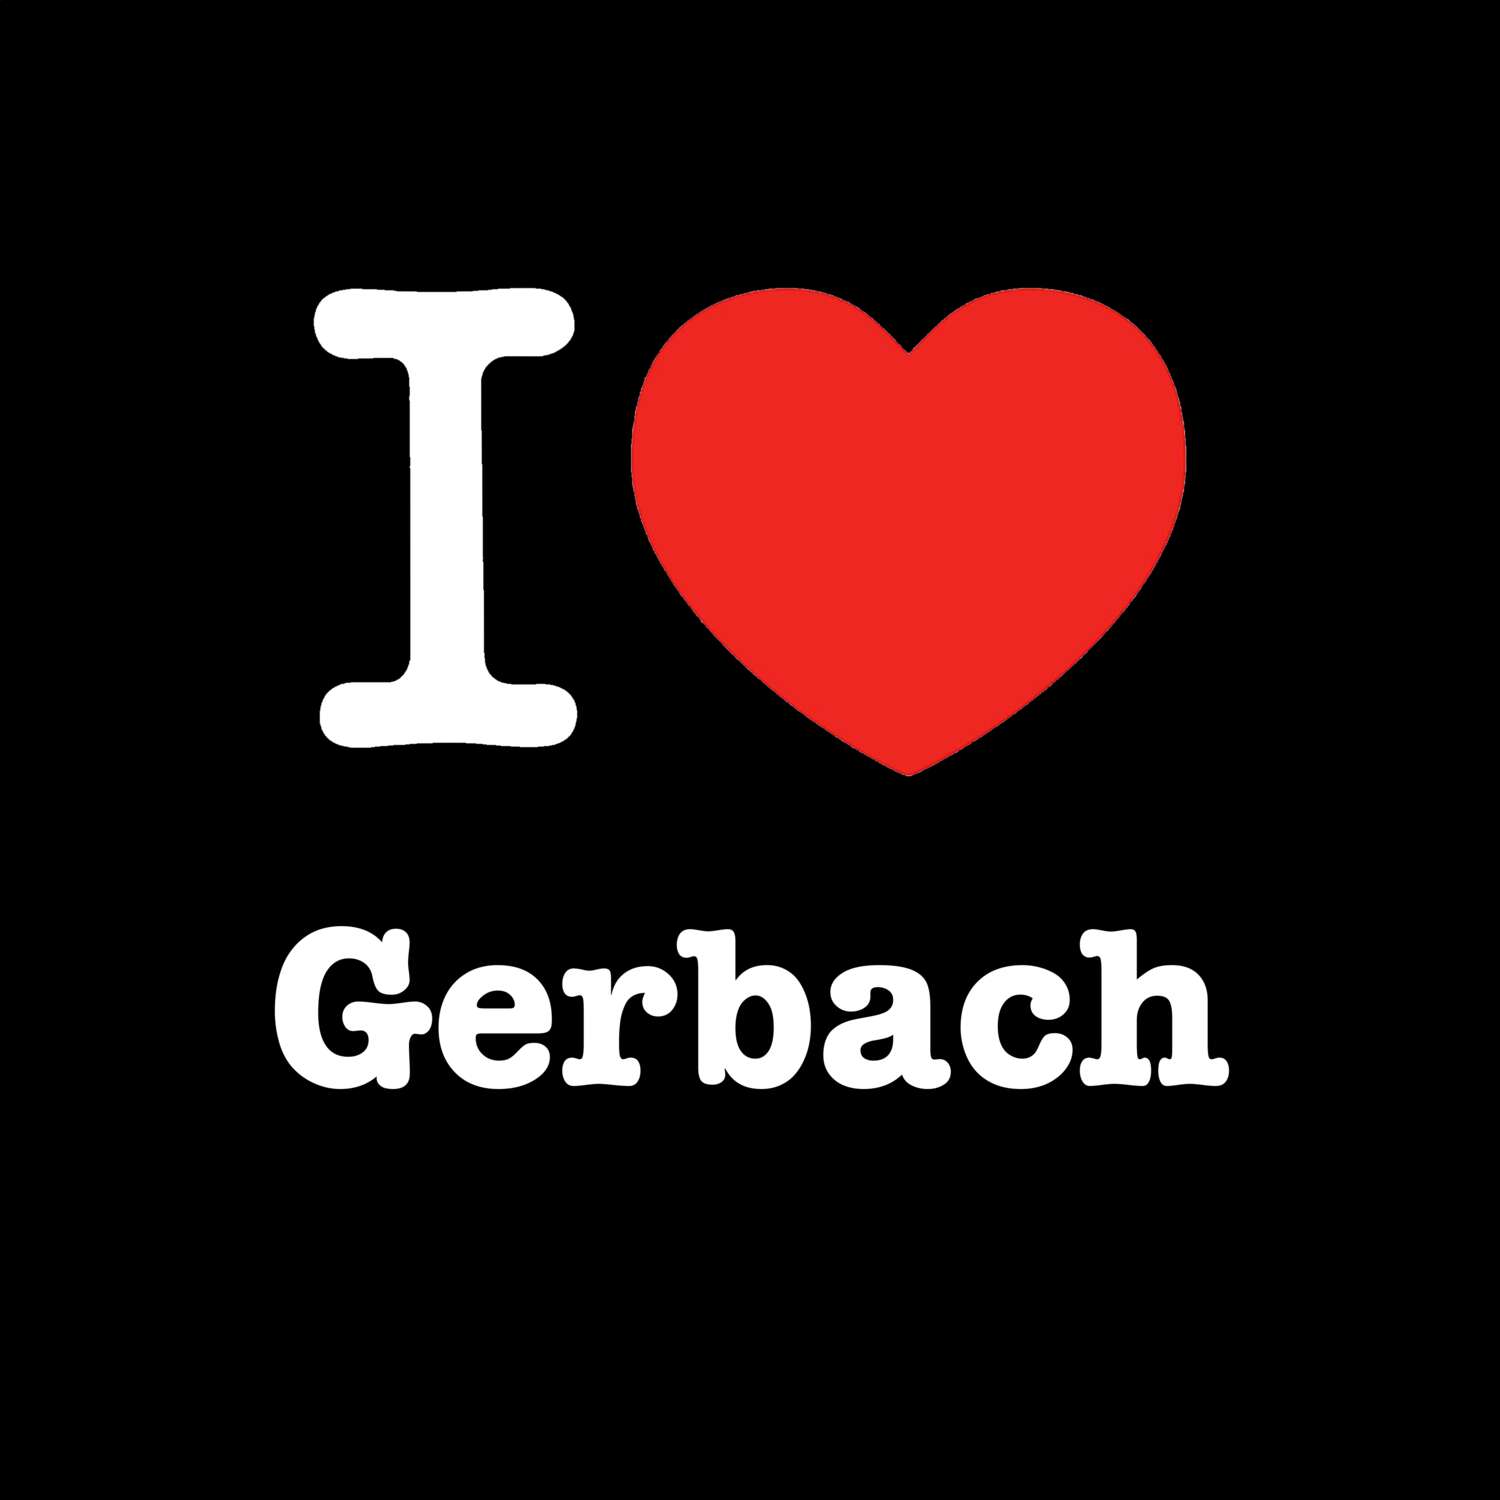 Gerbach T-Shirt »I love«